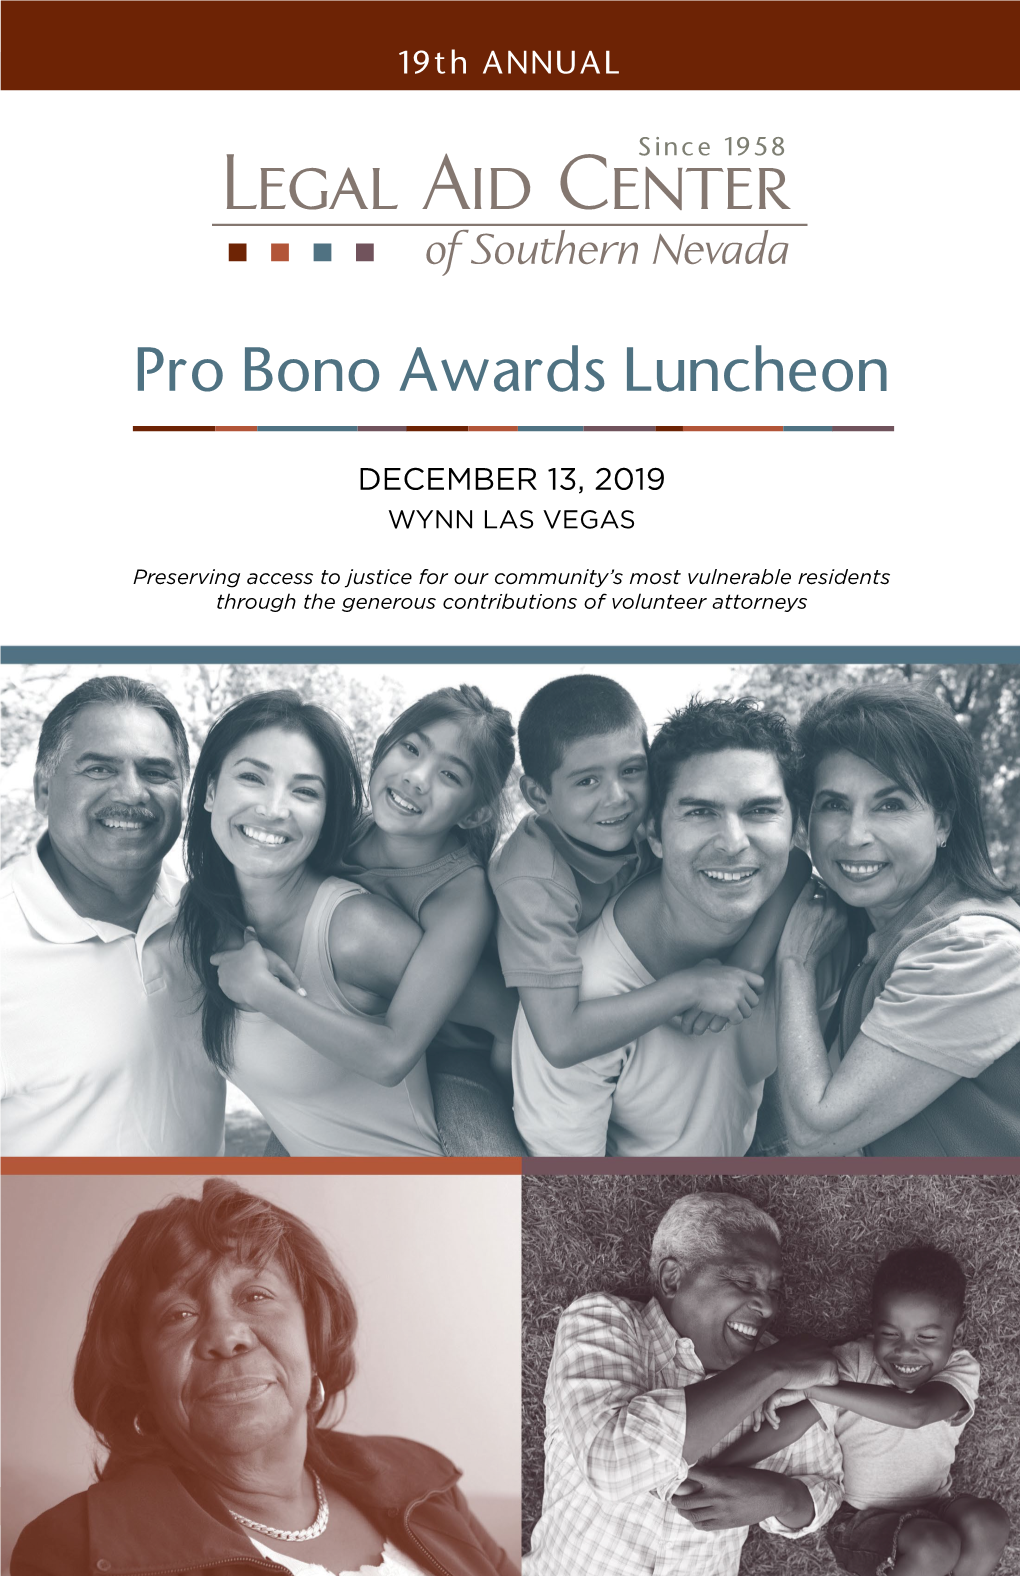 Pro Bono Awards Luncheon